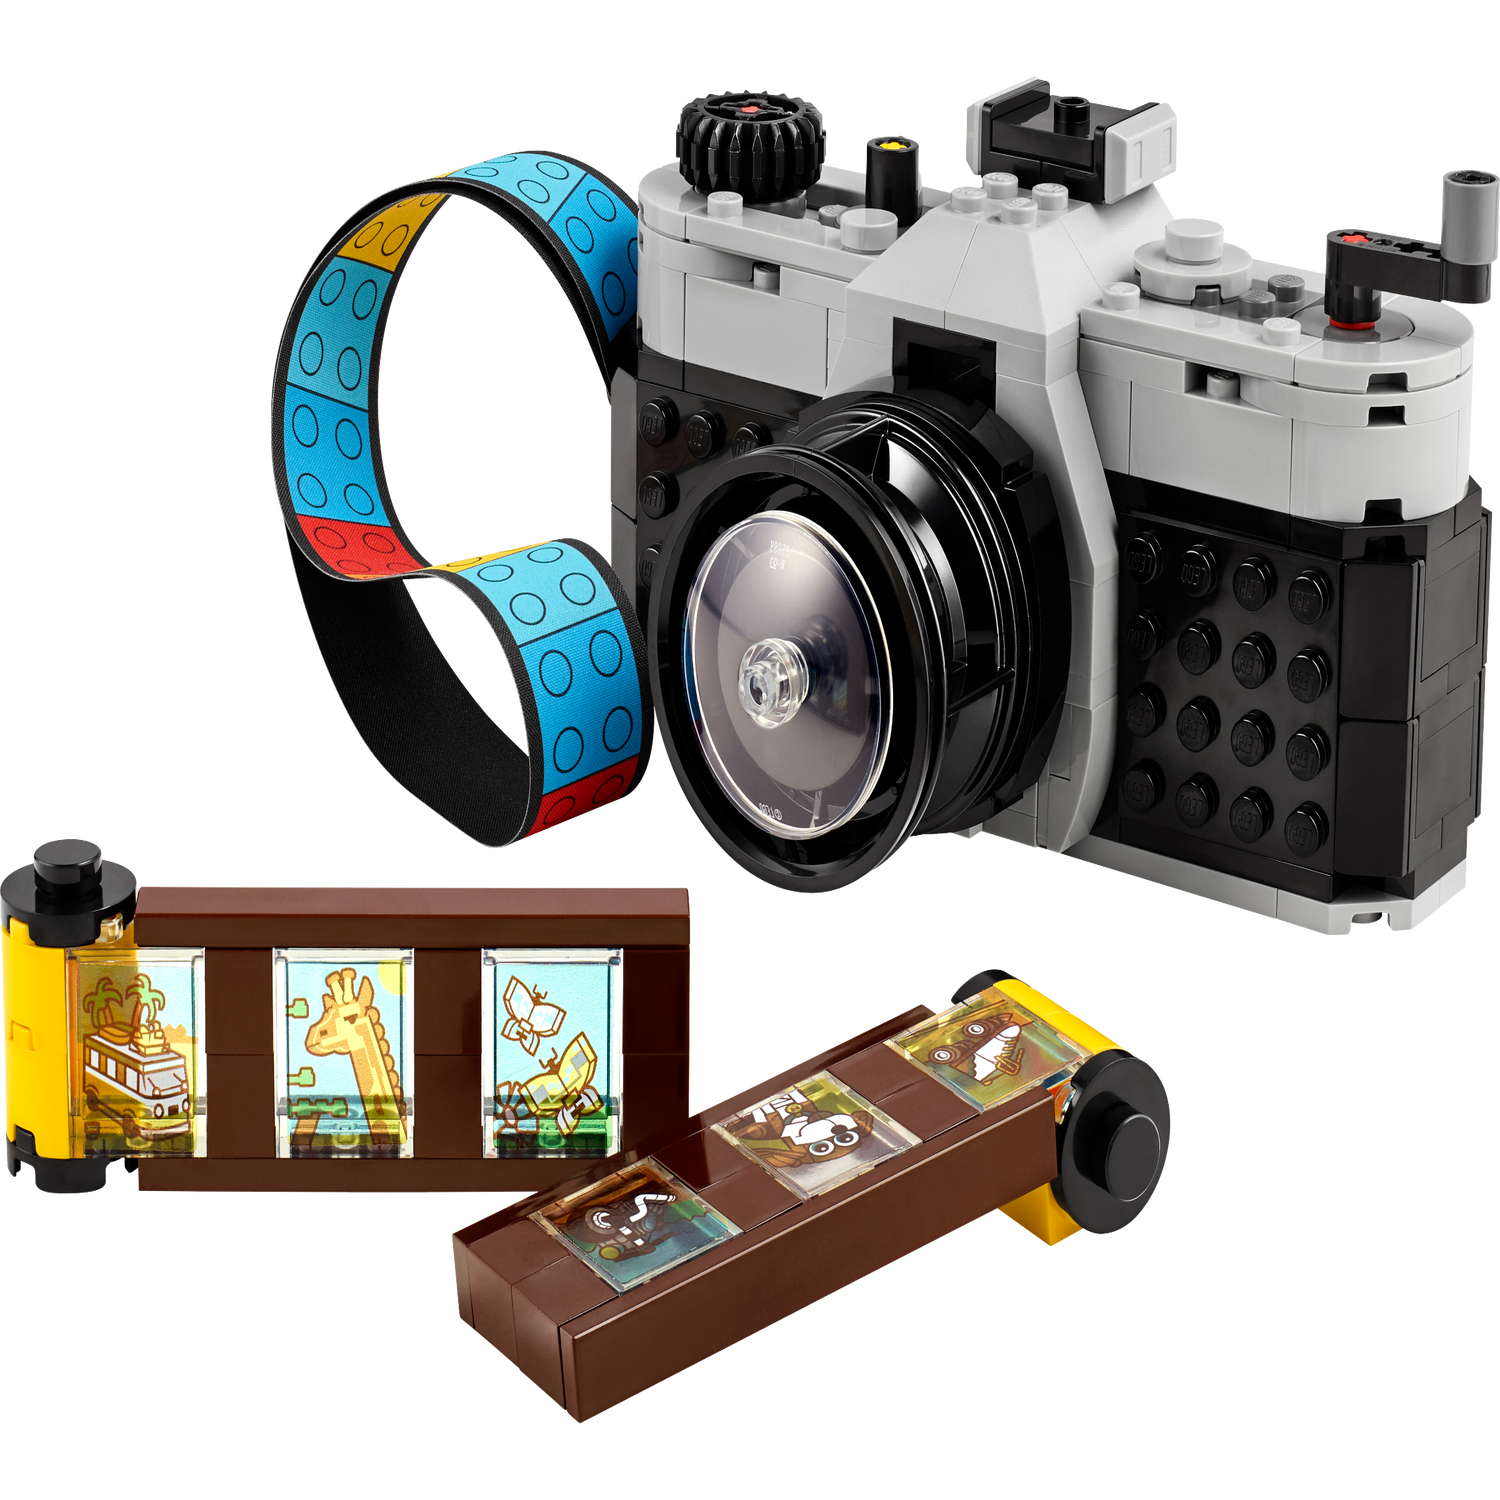 LEGO IDEAS - Ready, Set, Go STEM! - Vintage Movie Camera